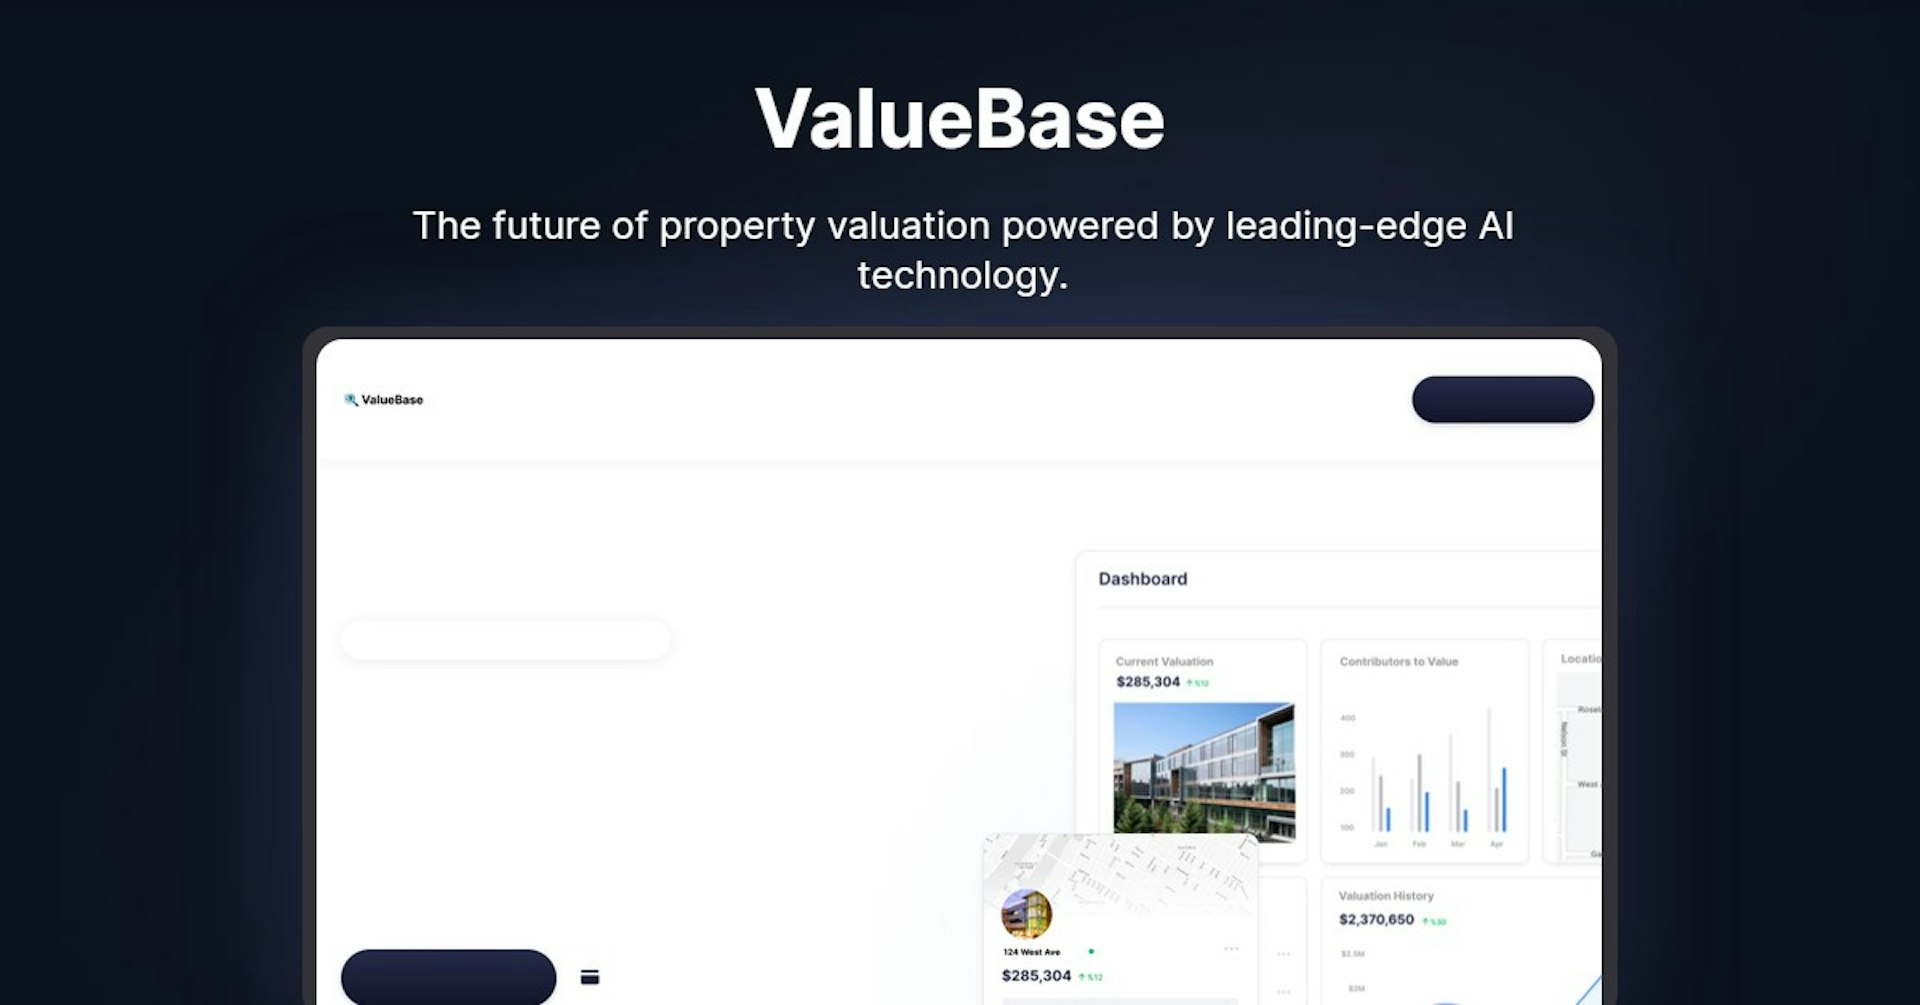 ValueBase